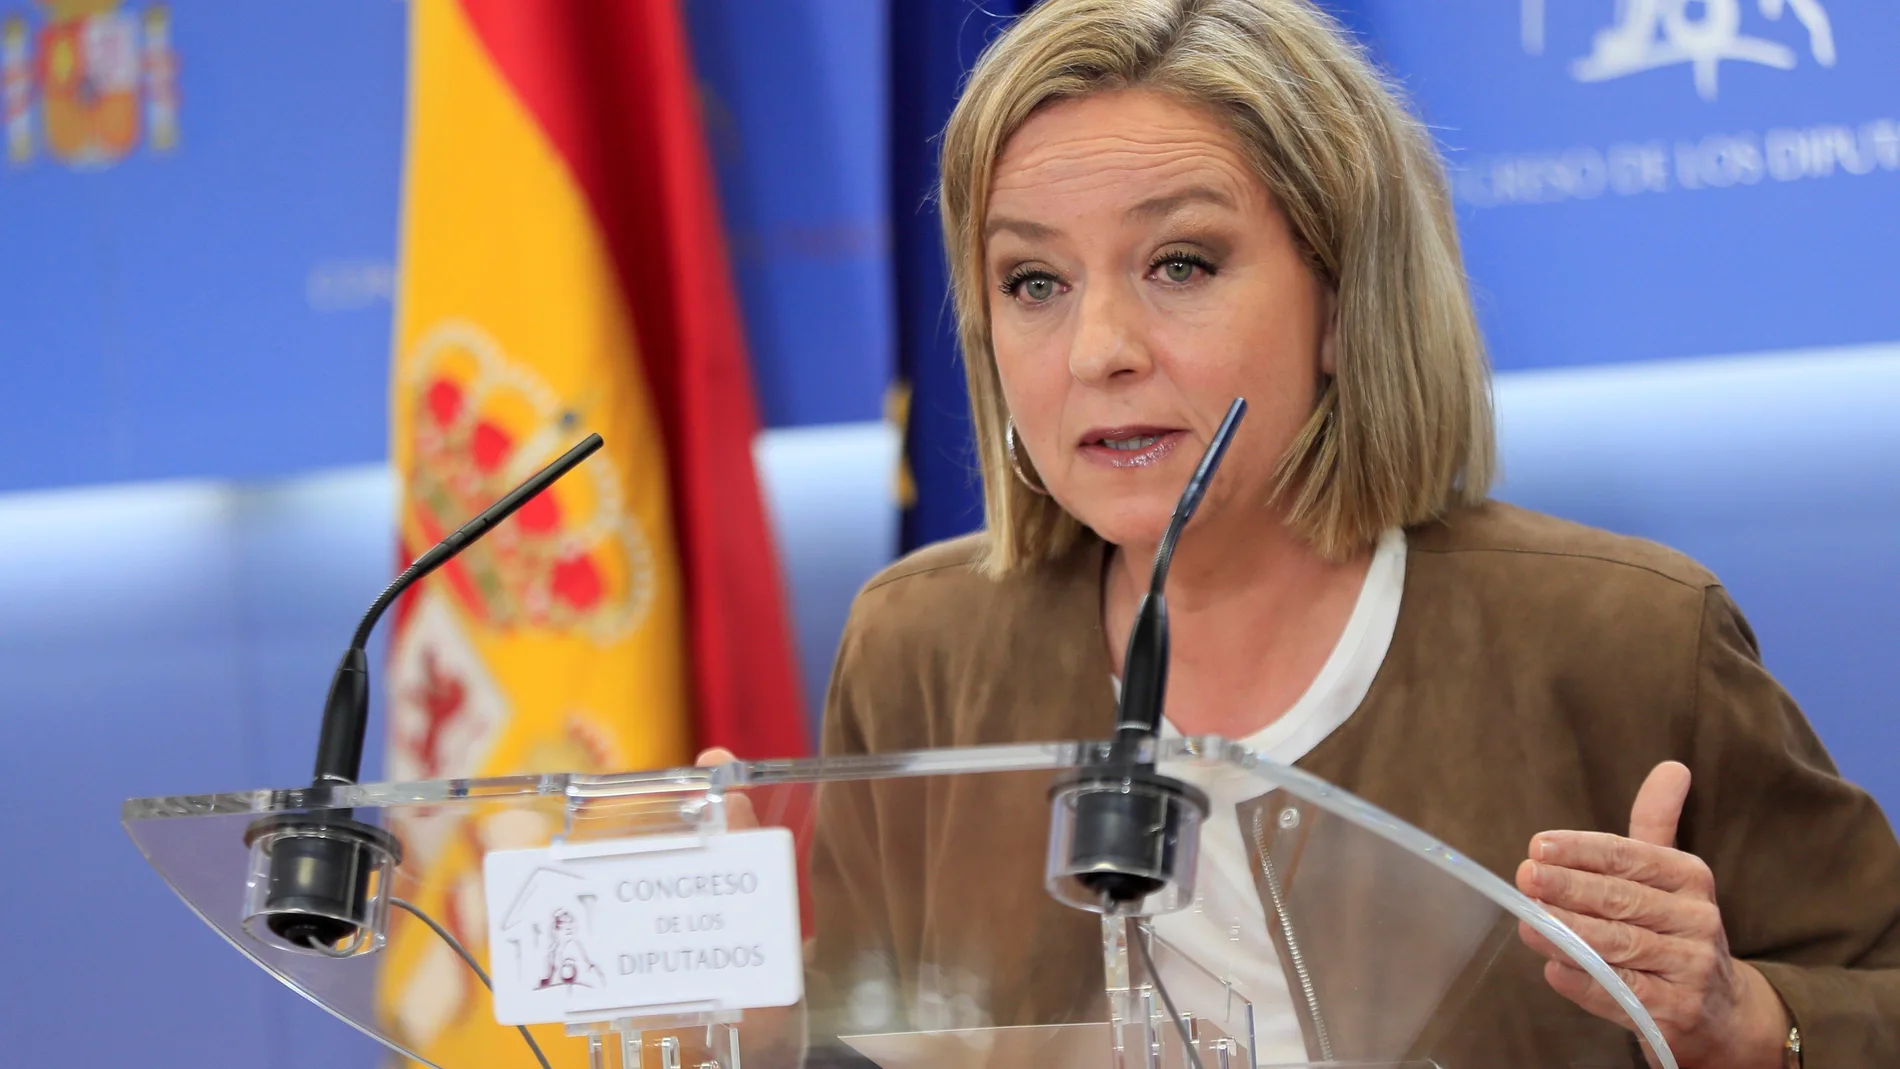 Rueda de prensa de la diputada de Coalición Canaria, Ana Oramas